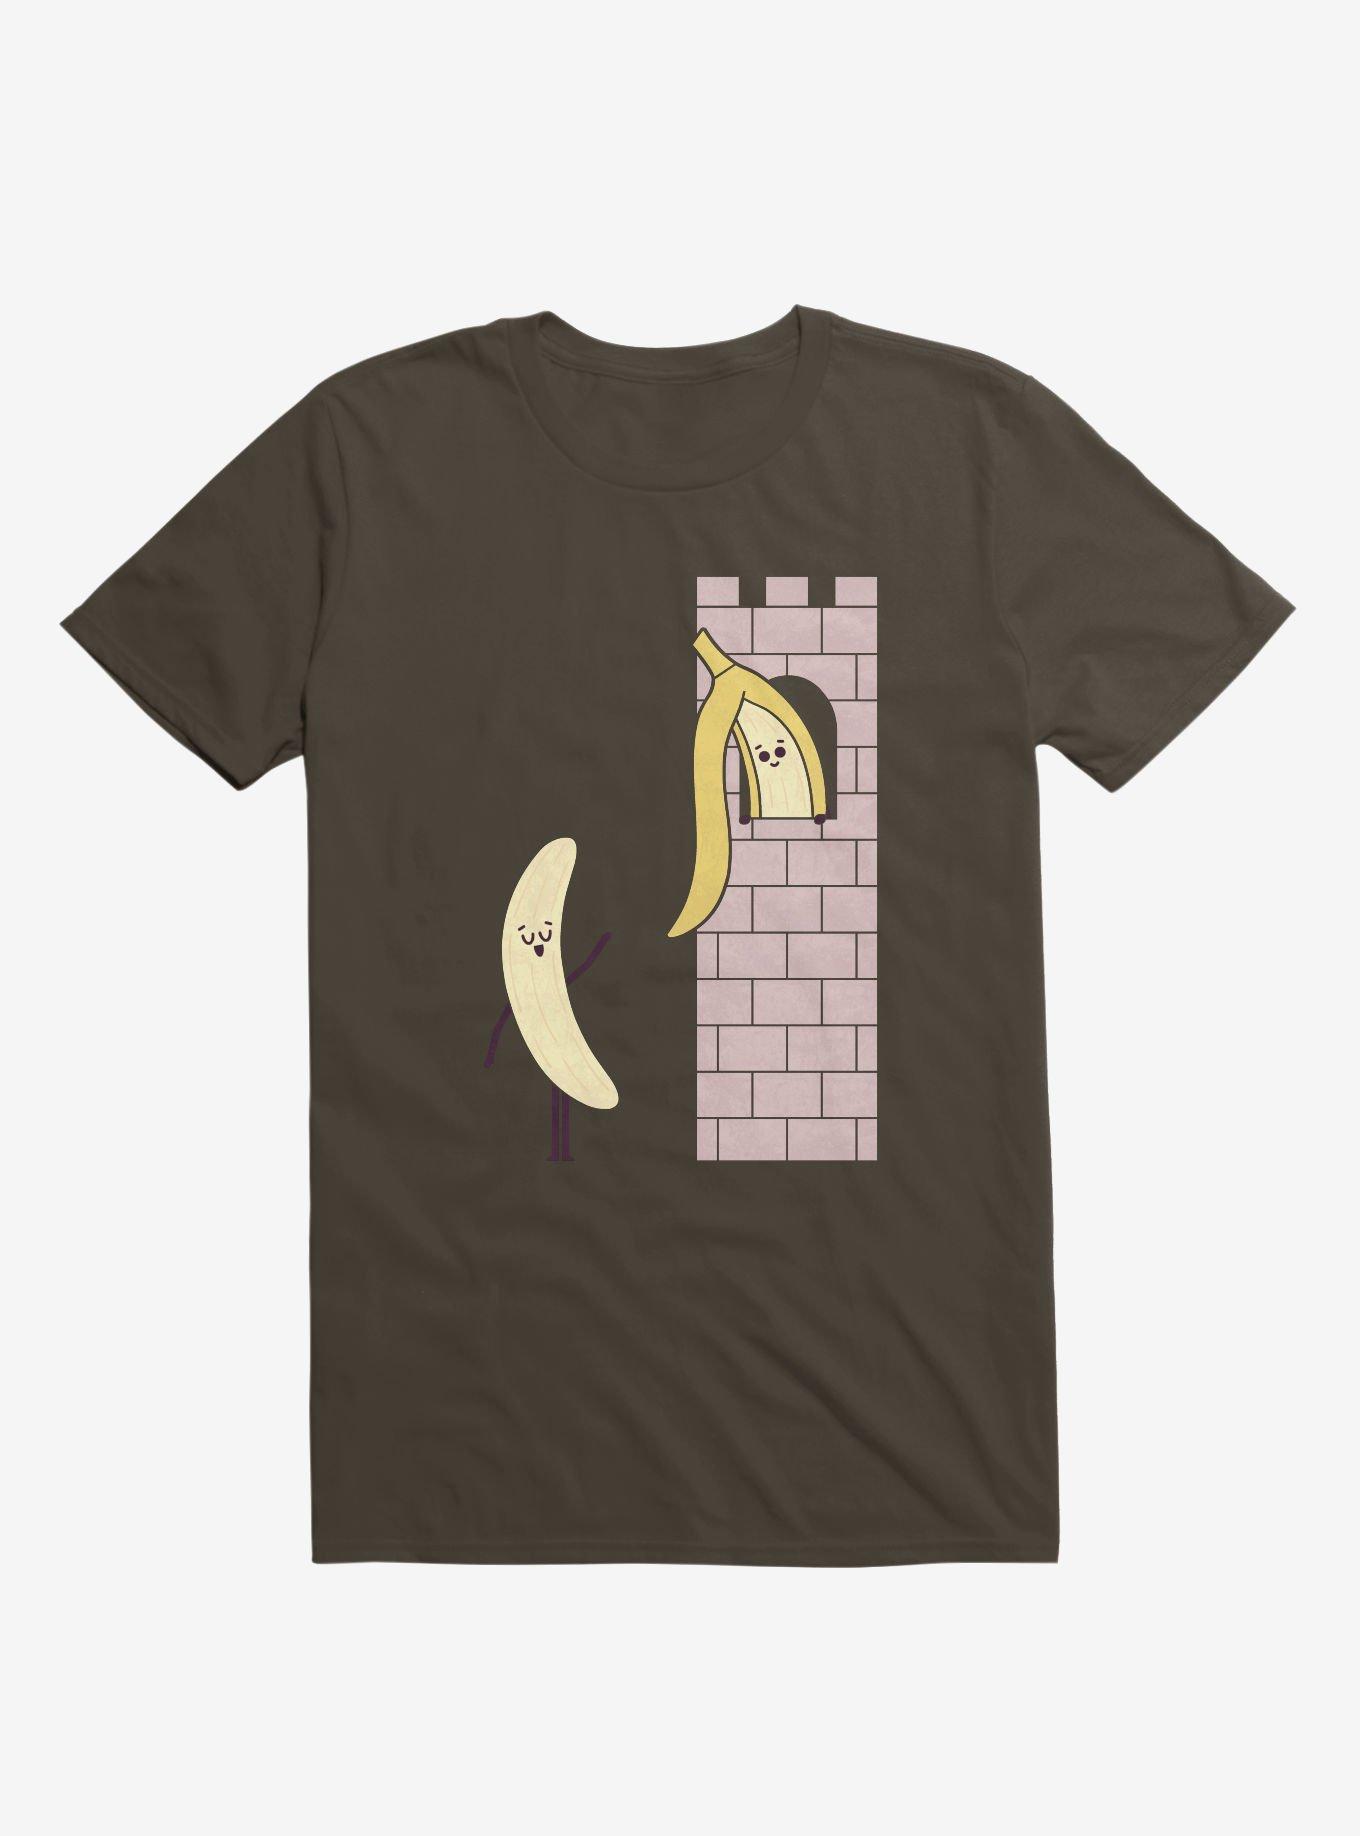 Let Down Your Peel Banana Castle T-Shirt